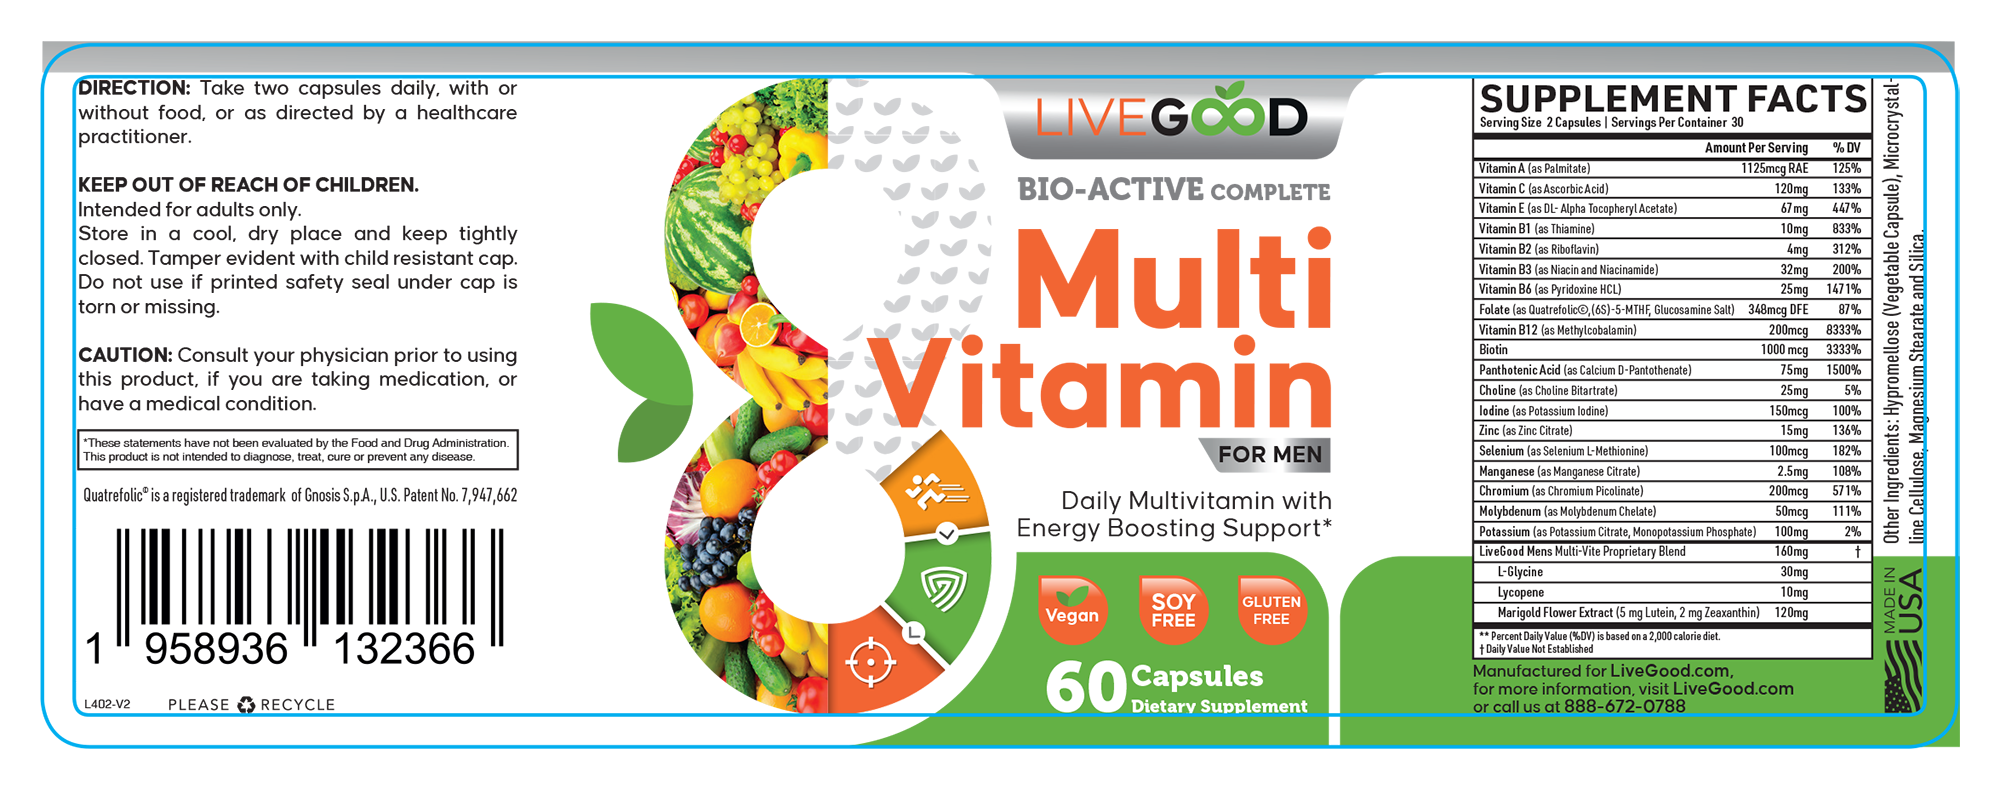 LiveGood BioActive Complete Multivitamin For Men